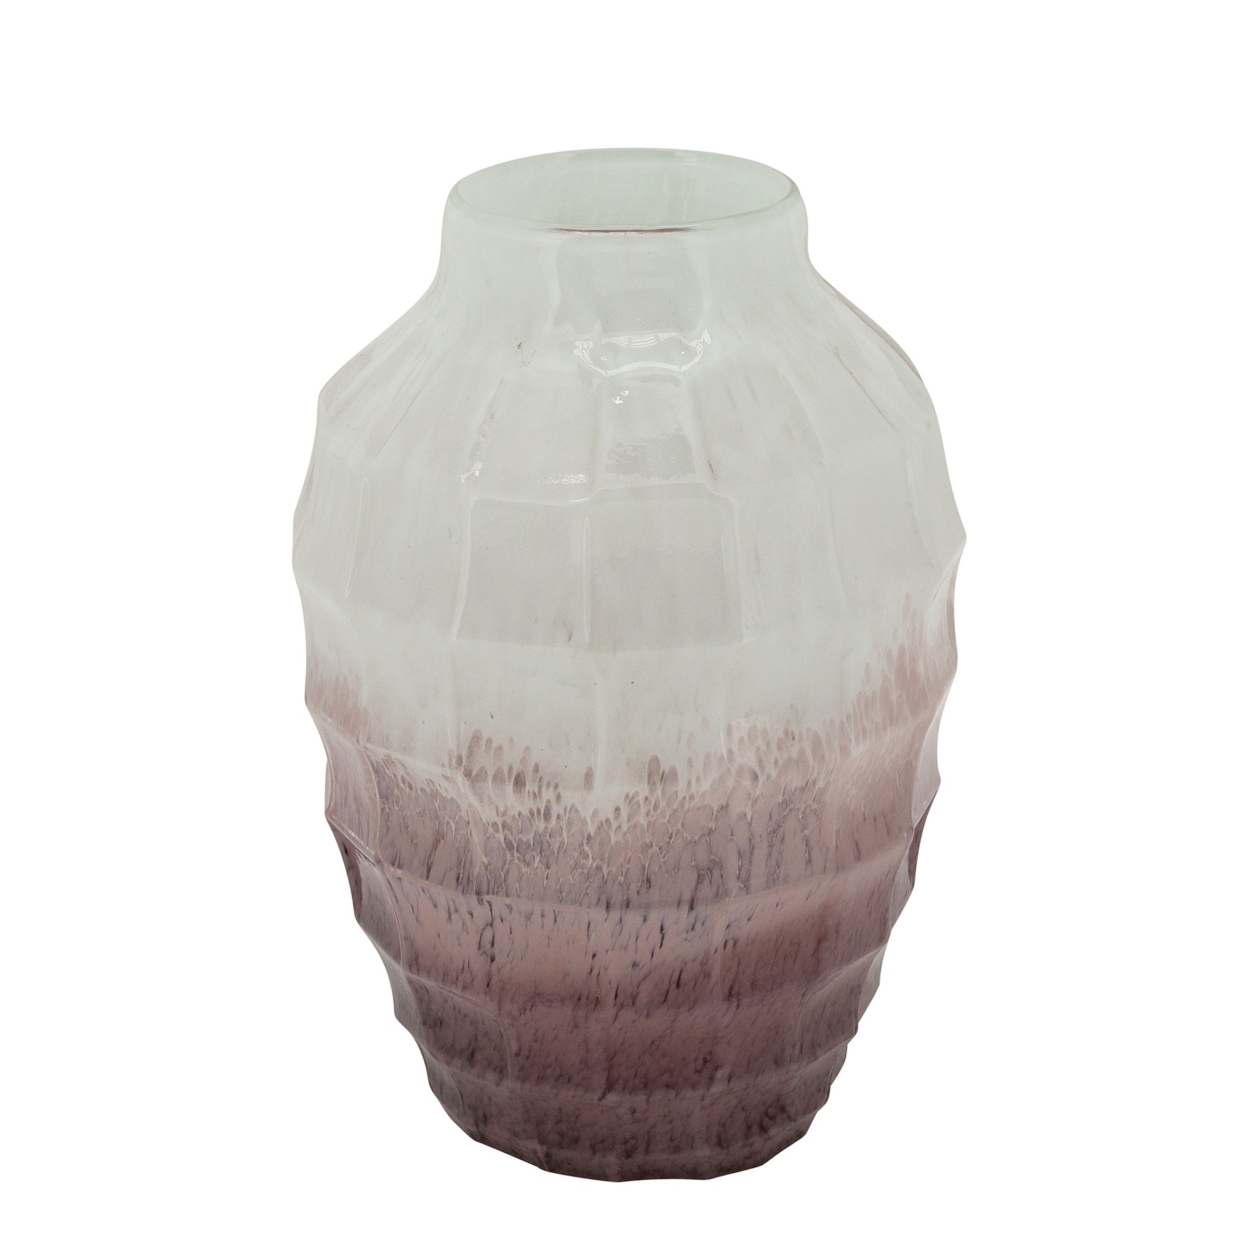 12 Inches Geometric Textured Glass Vase, White And Brown- Saltoro Sherpi